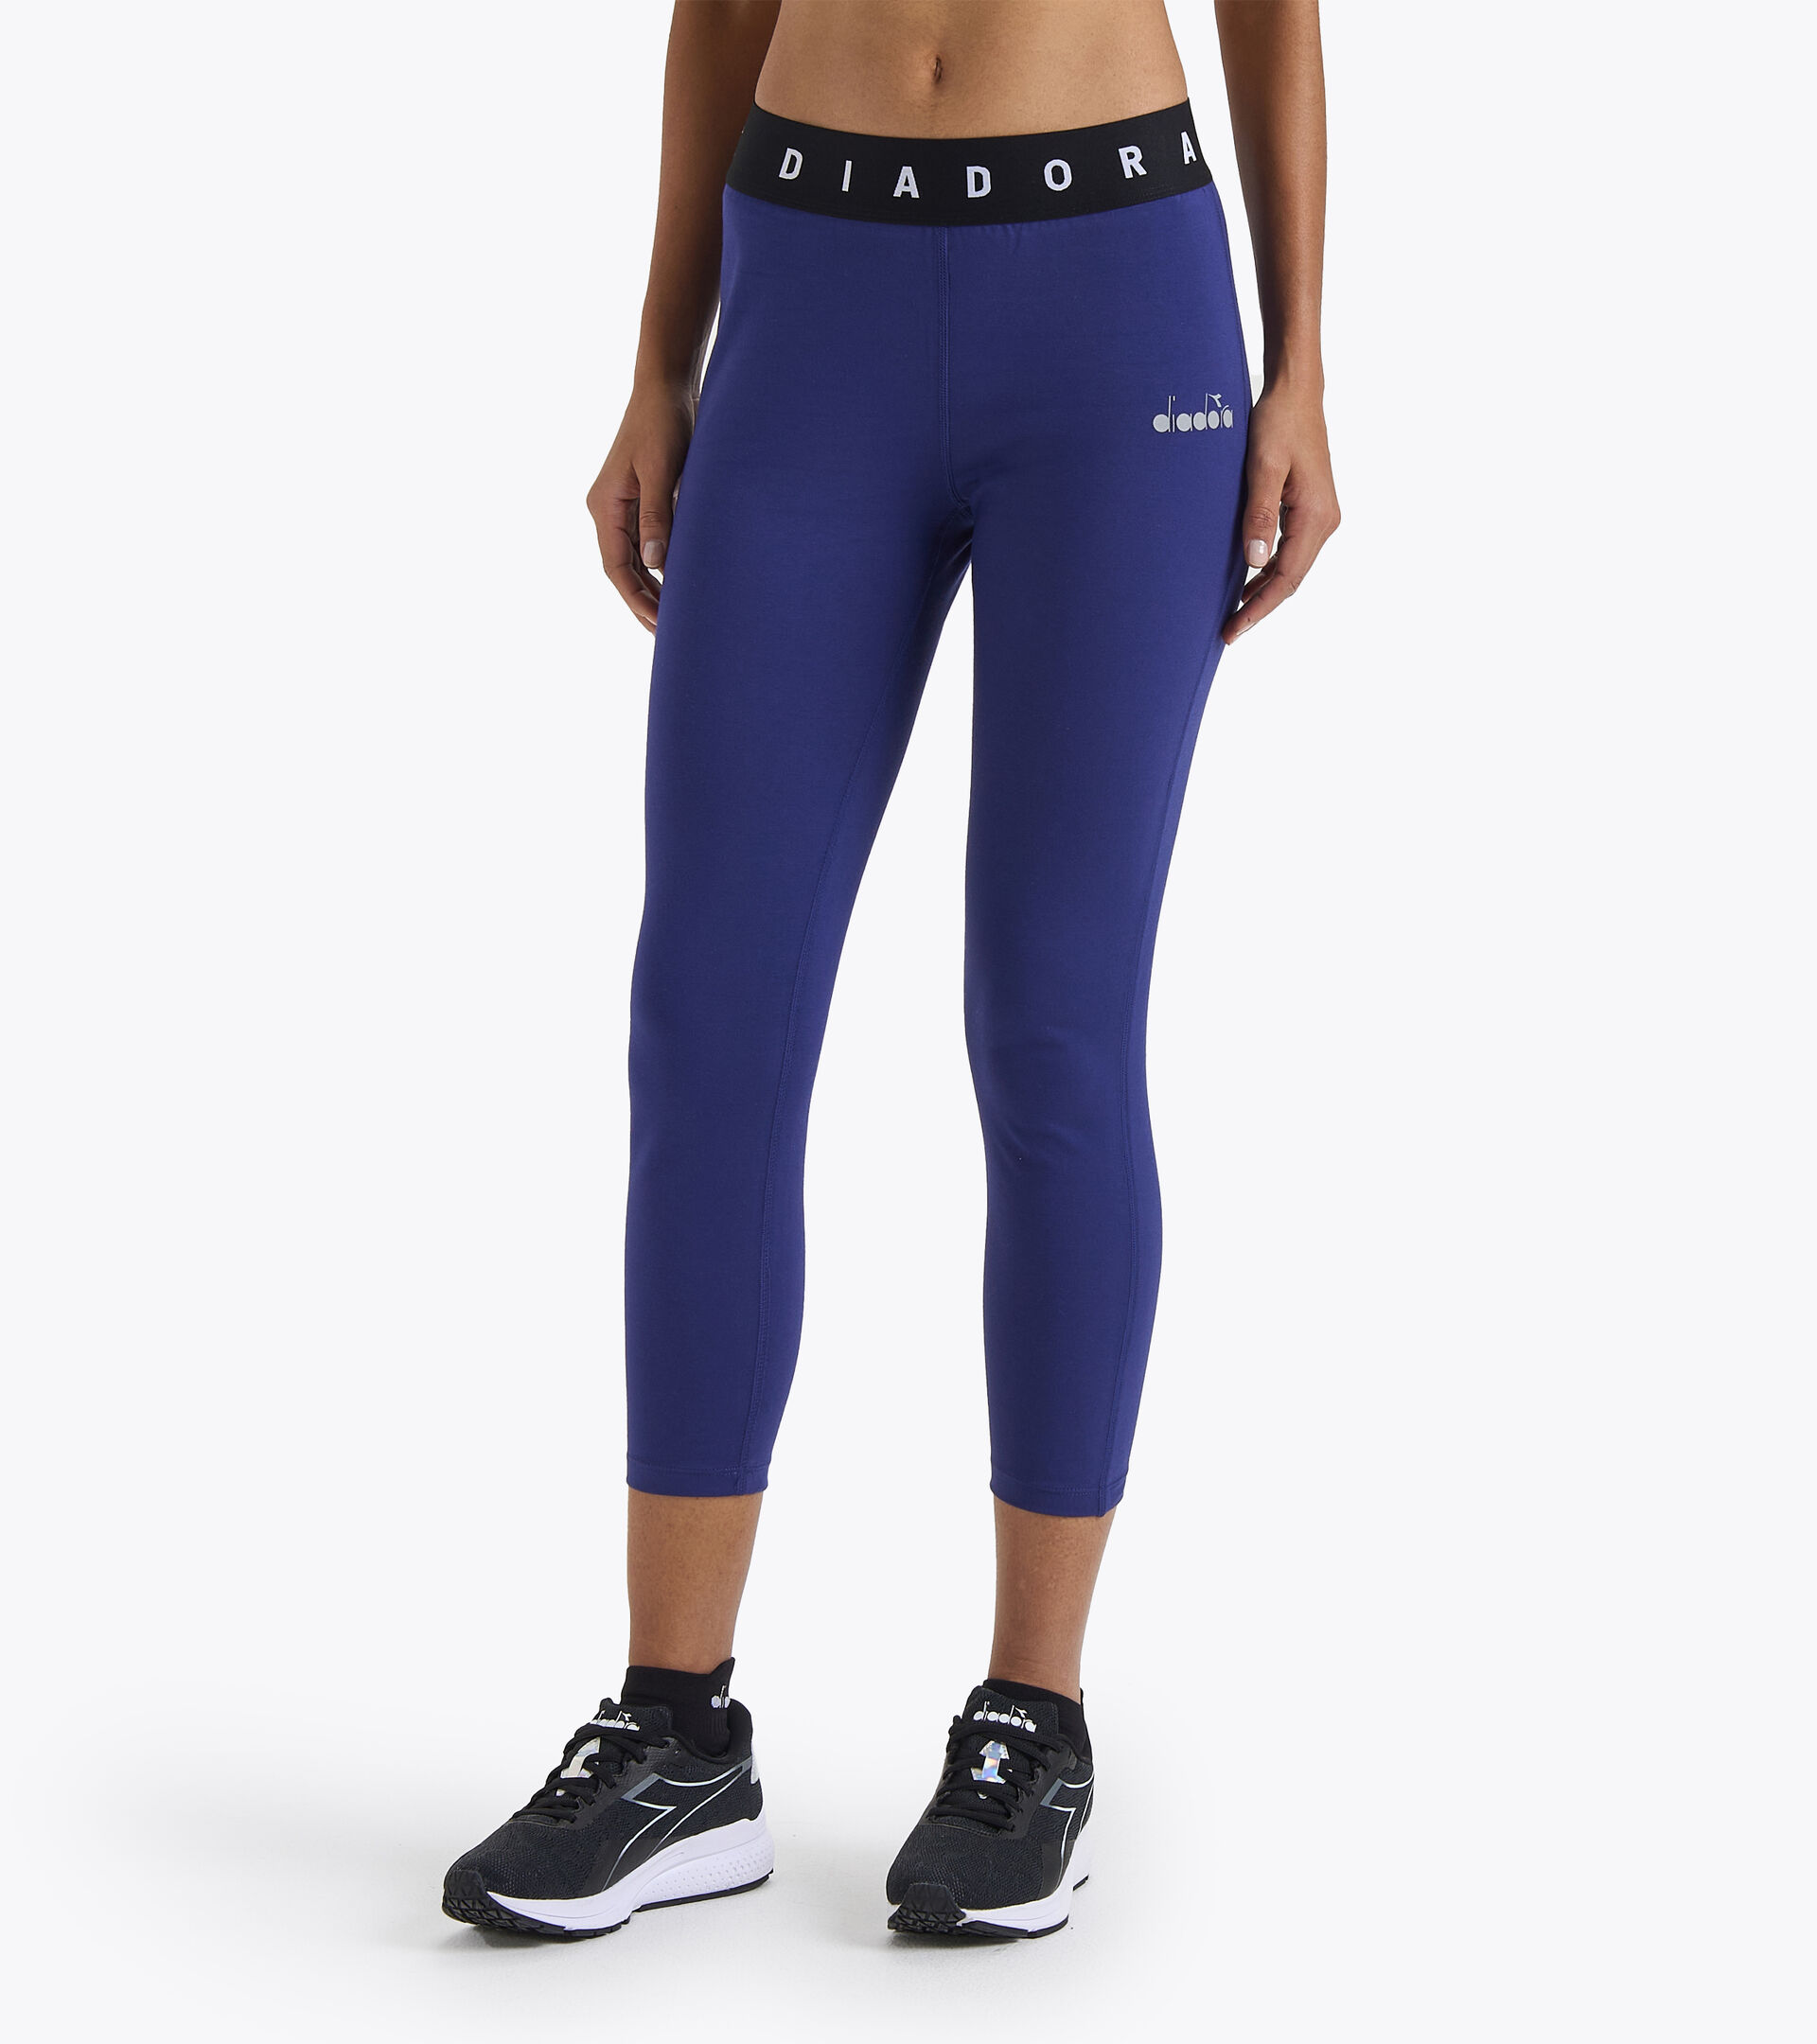 Women's Running Capris, Tights & Pants - Running Warehouse